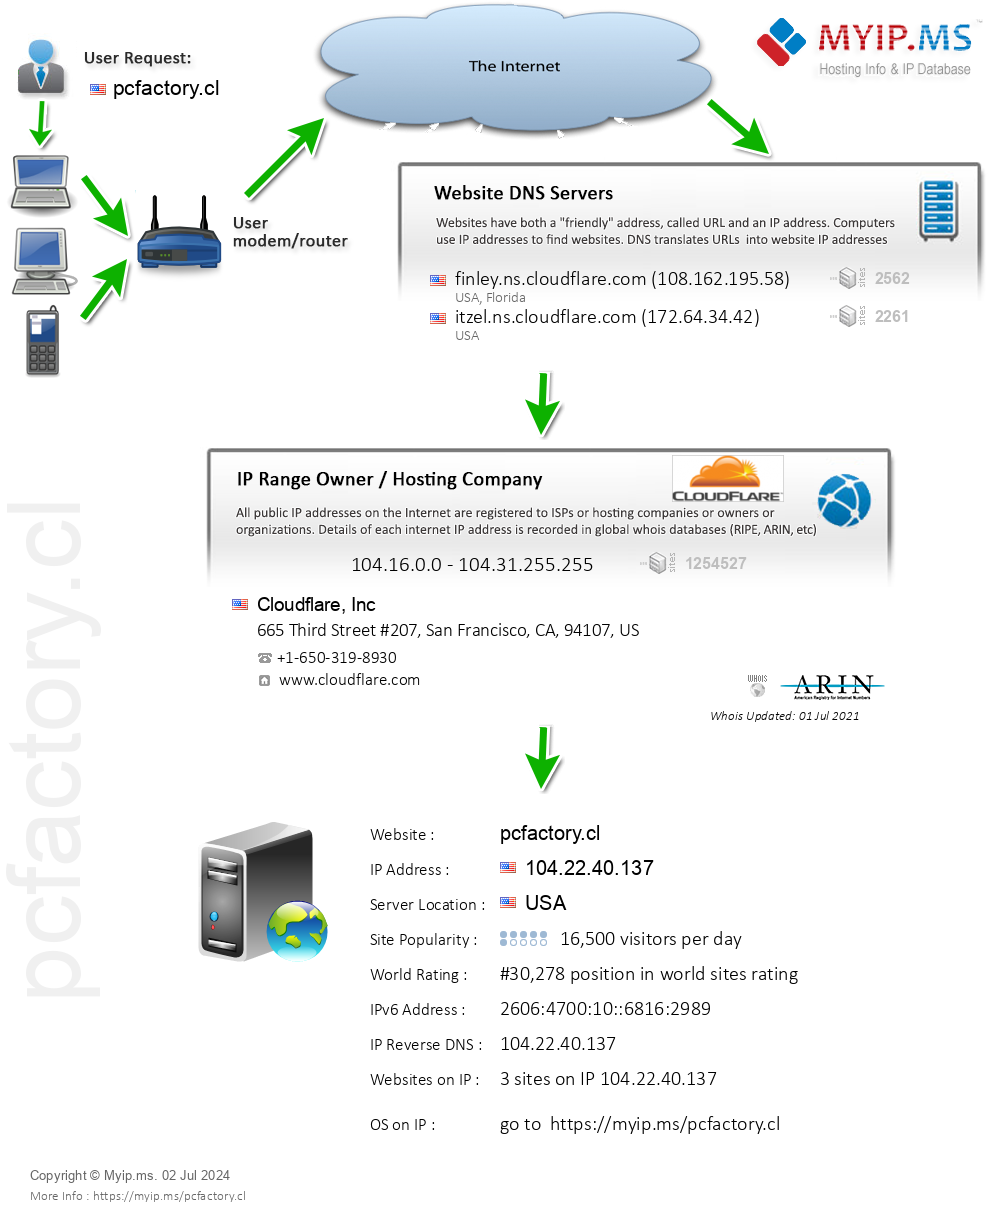 Pcfactory.cl - Website Hosting Visual IP Diagram